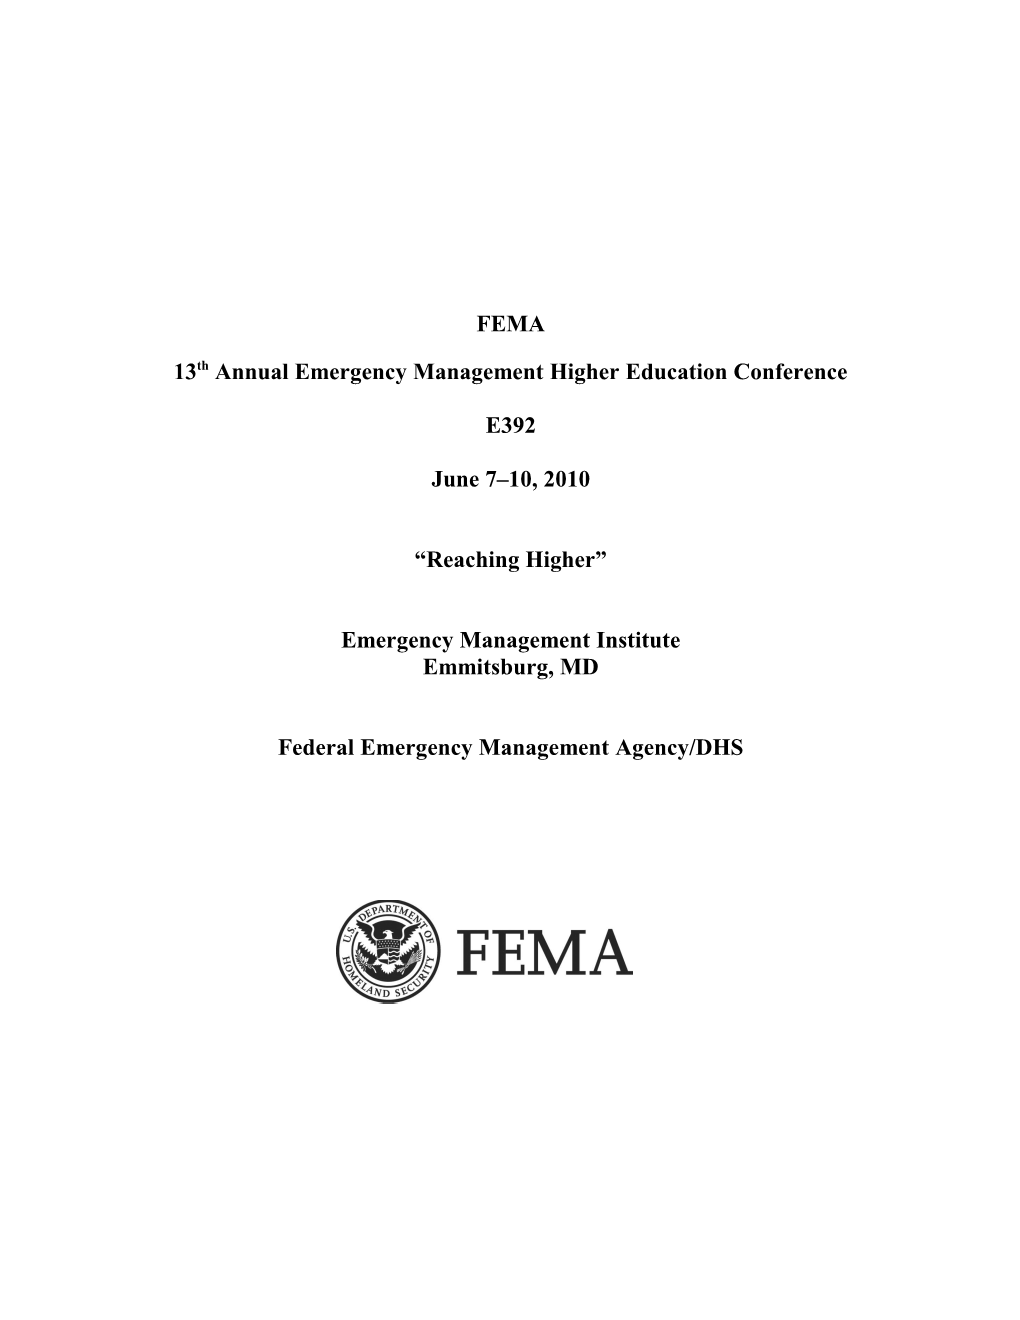 Emergency Management and Homeland Security/Defense